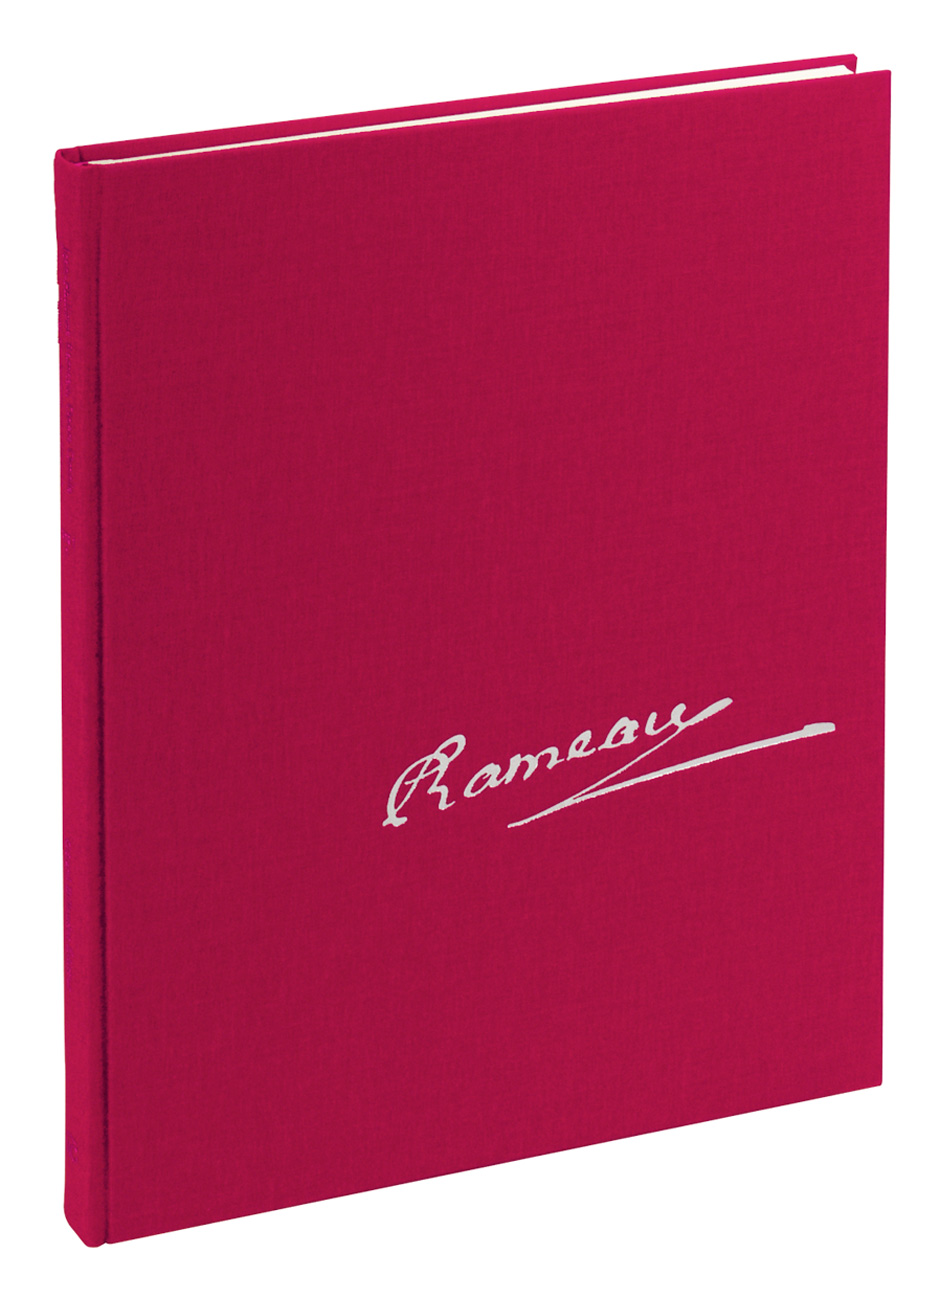 Jean-Philippe Rameau: Anacreon: Orchestra: Score